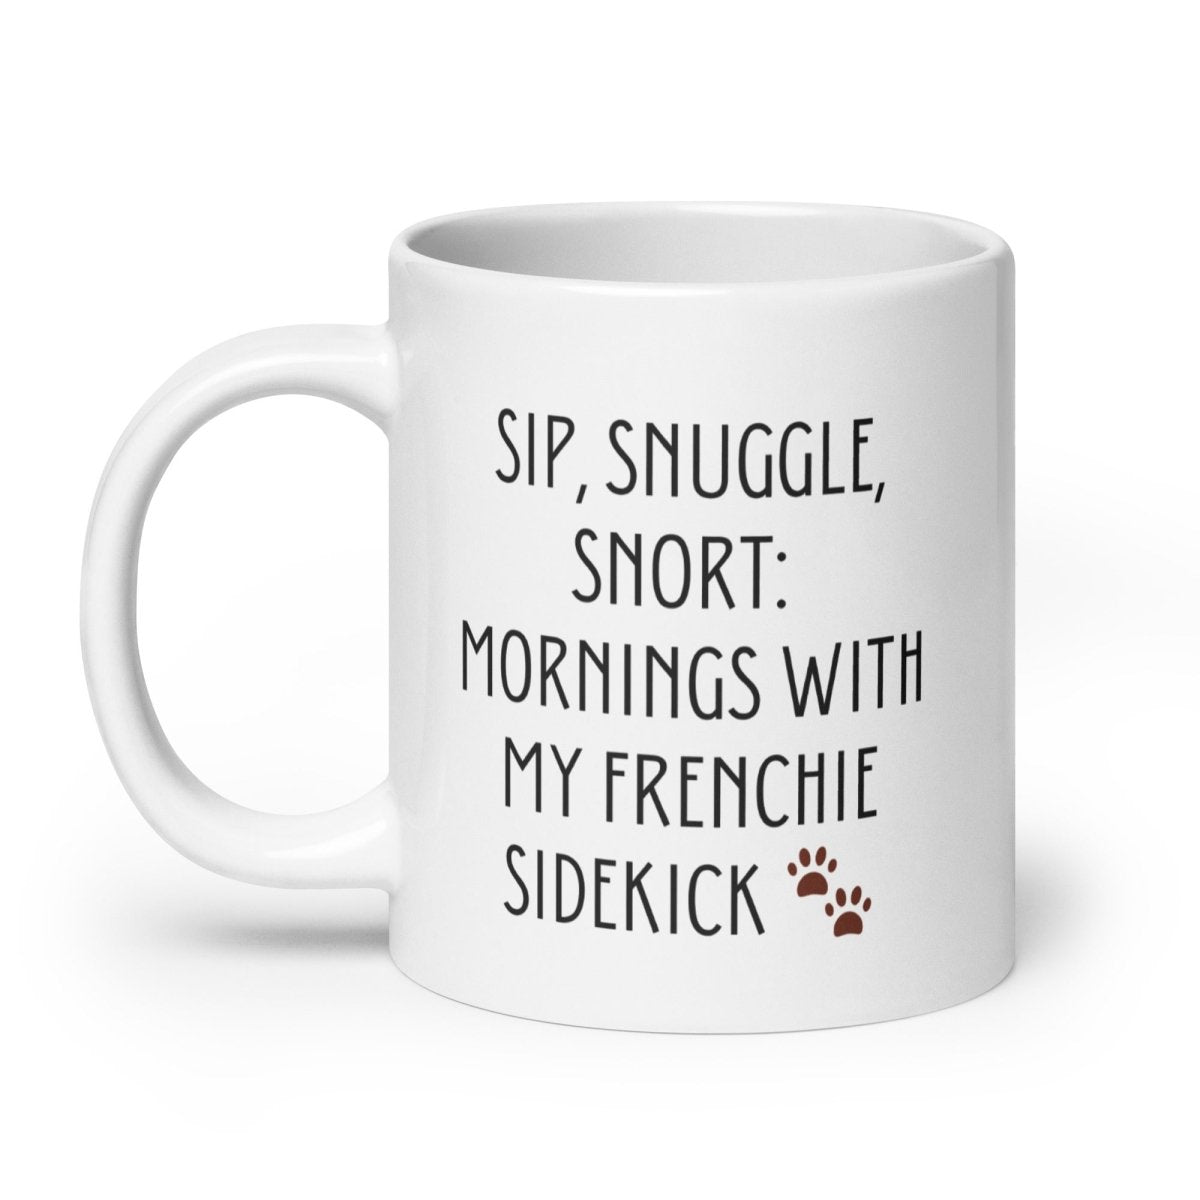 Frenchie Sidekick Mug - Funny Nikko